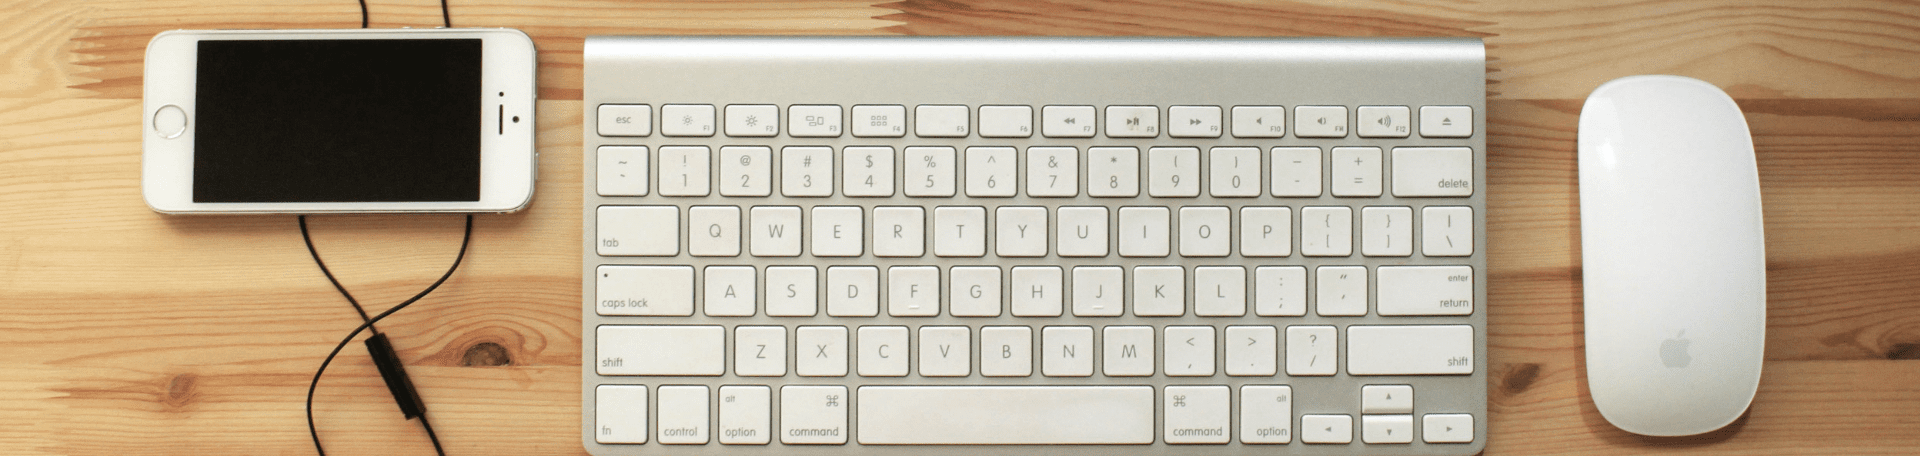 keyboard on surface